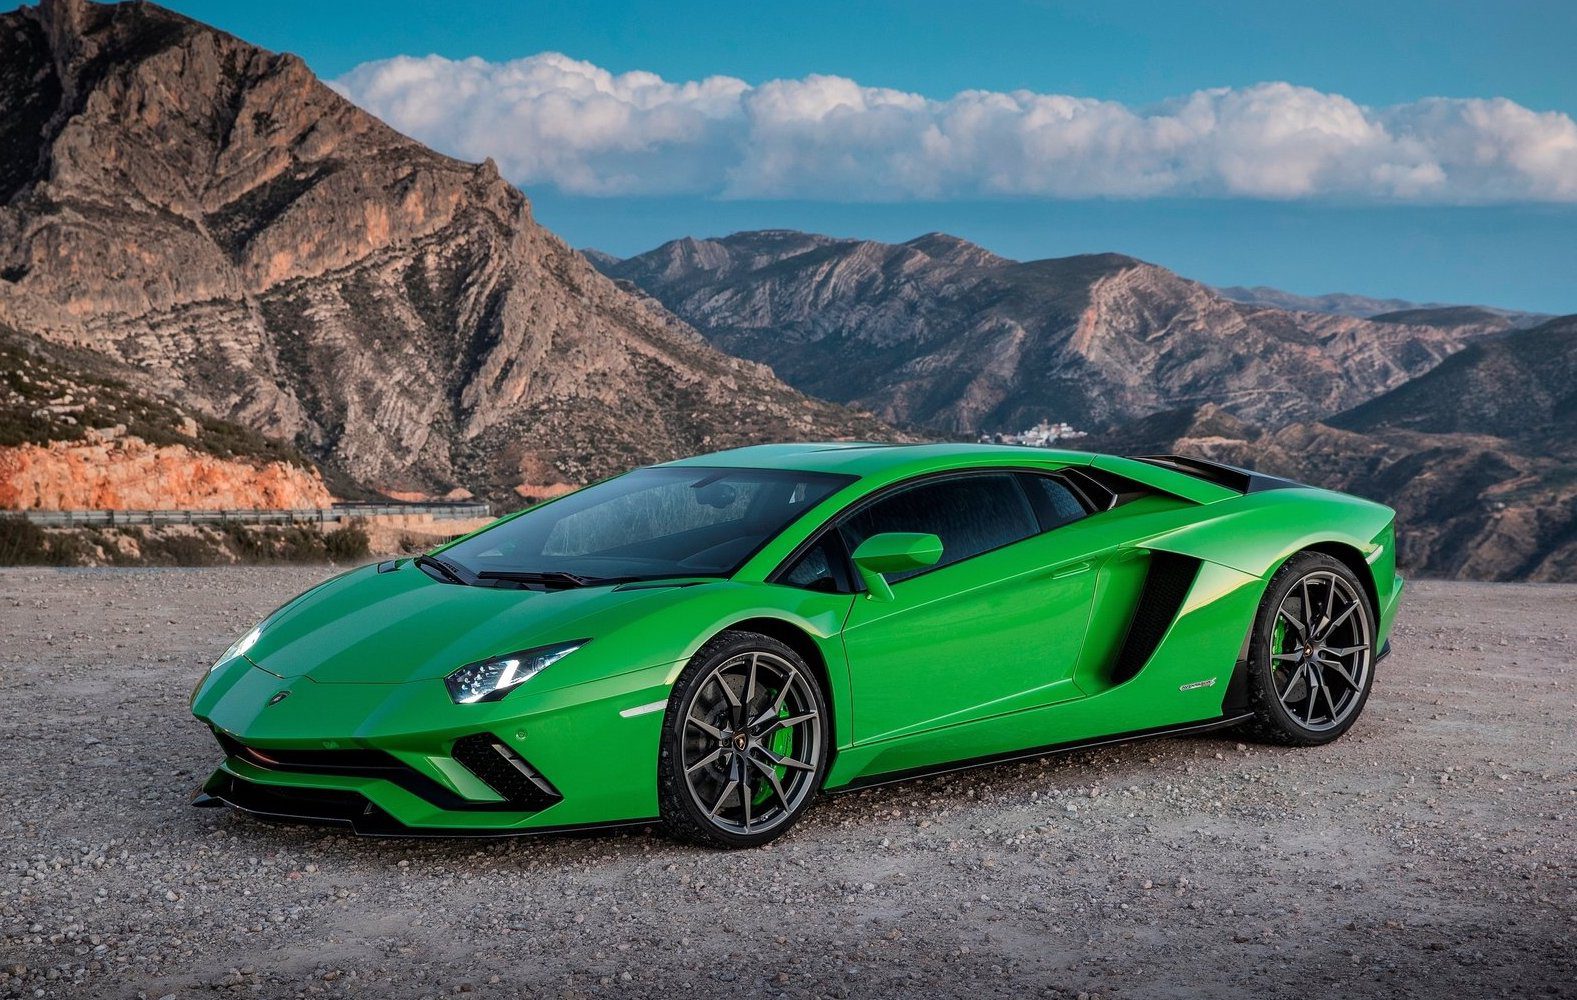 Should You Buy a Used Lamborghini in 2021?